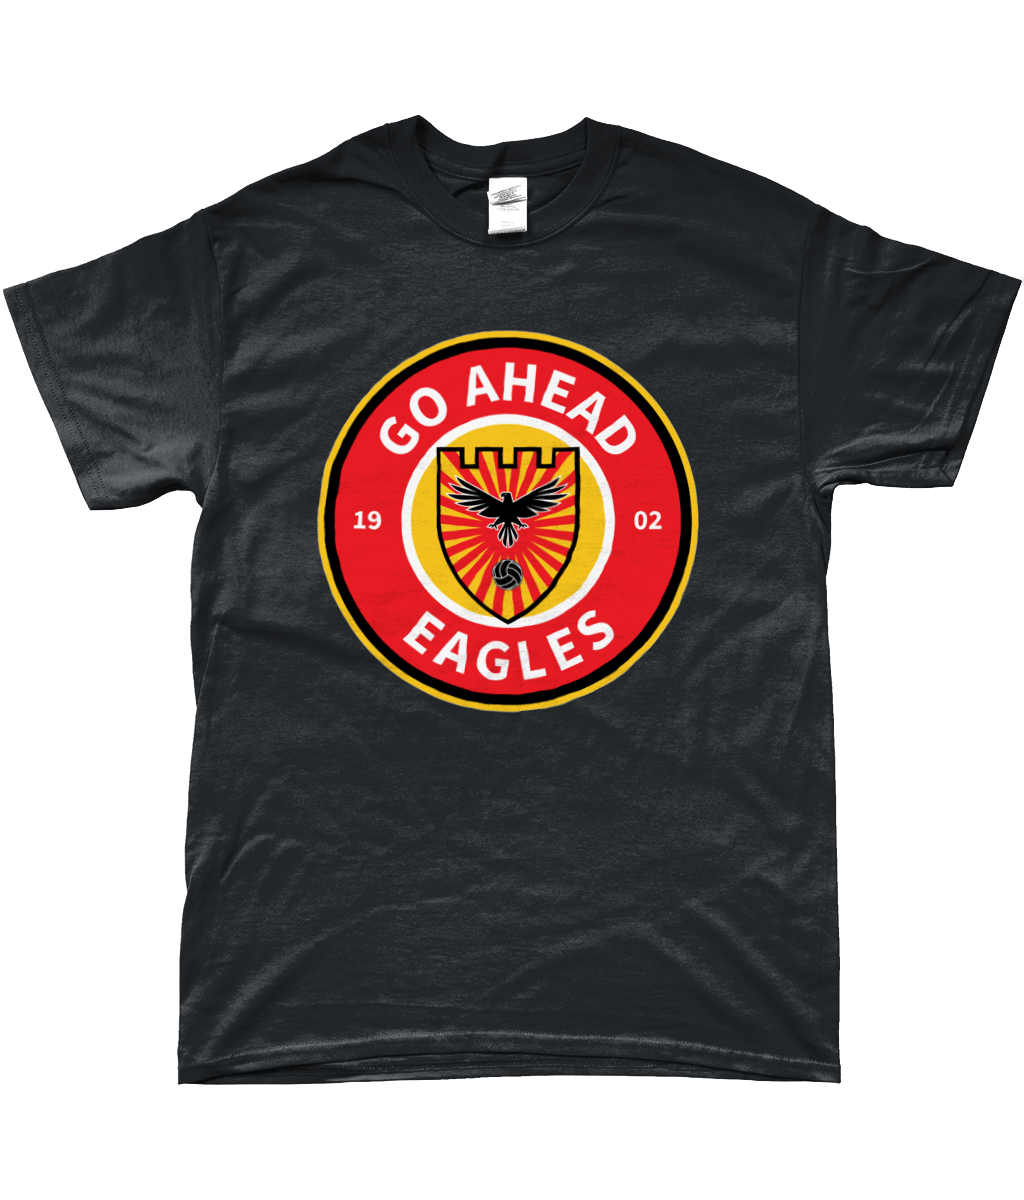 Go Ahead Eagles - De Adelaars T-shirt